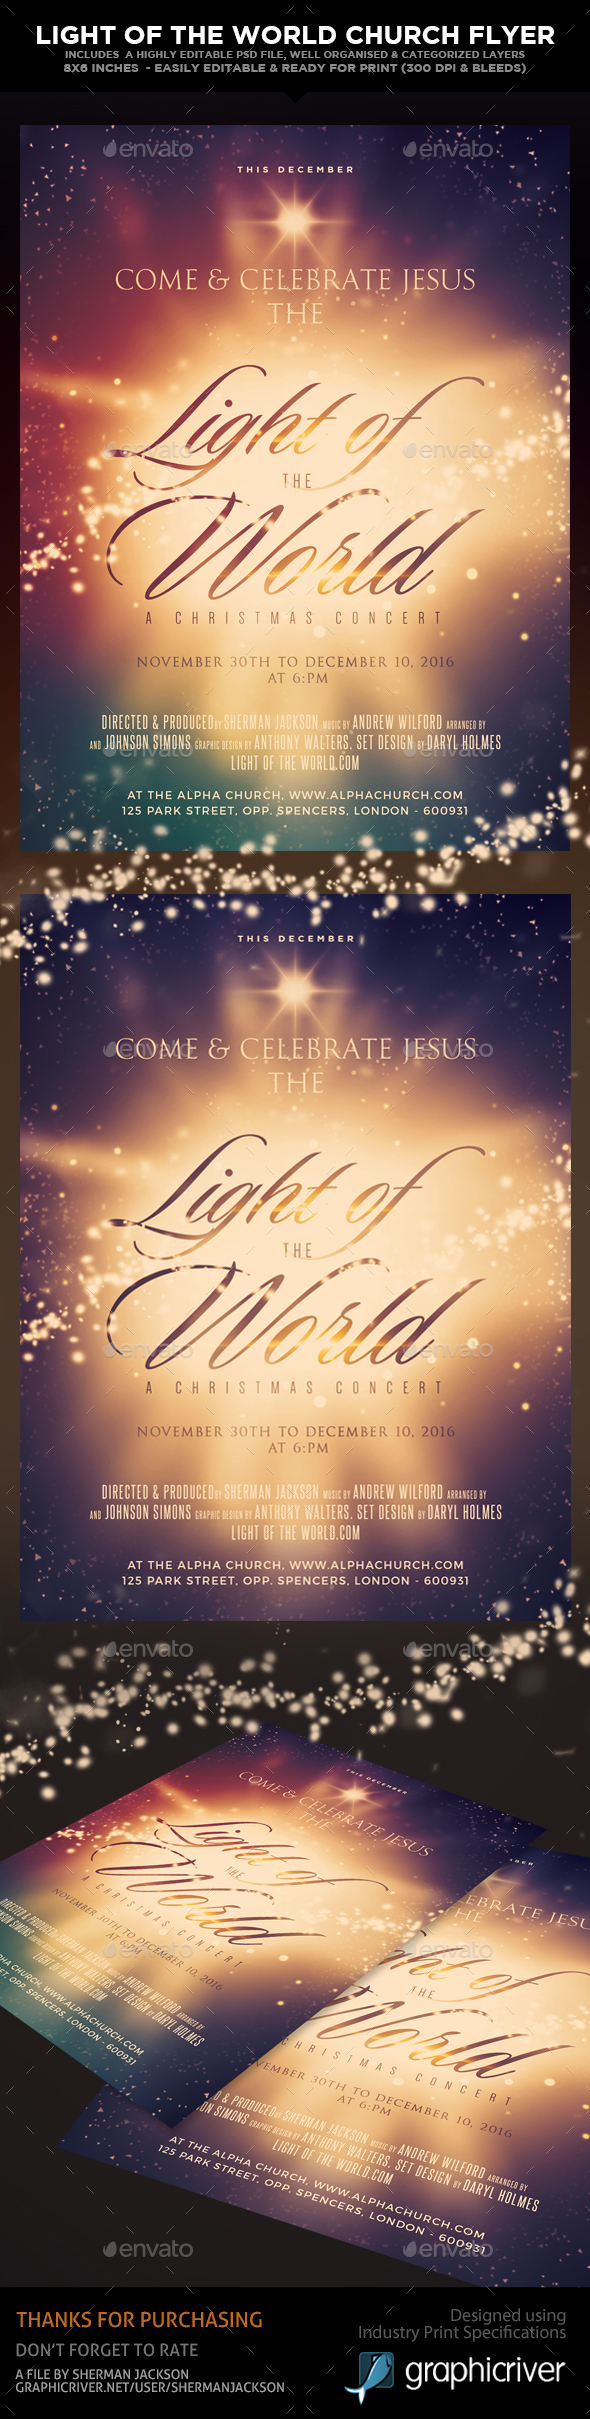 Light of the World - Church Christian Themed Flyer